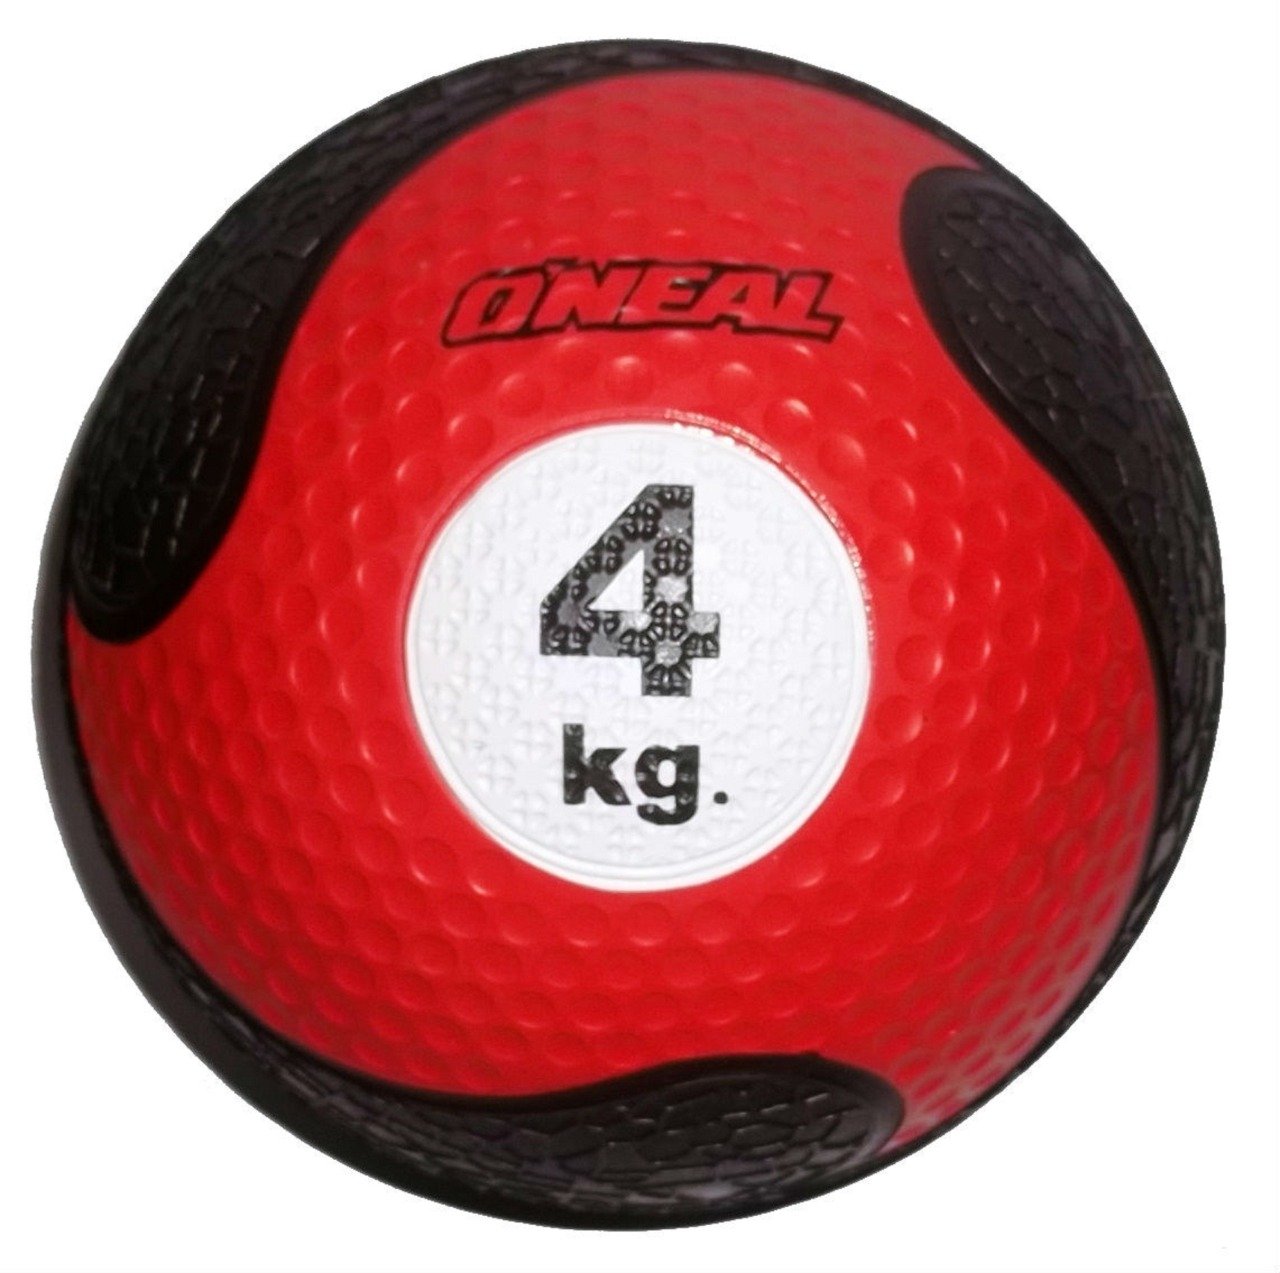 Medicine Ball 4Kg. - Oneal - 1